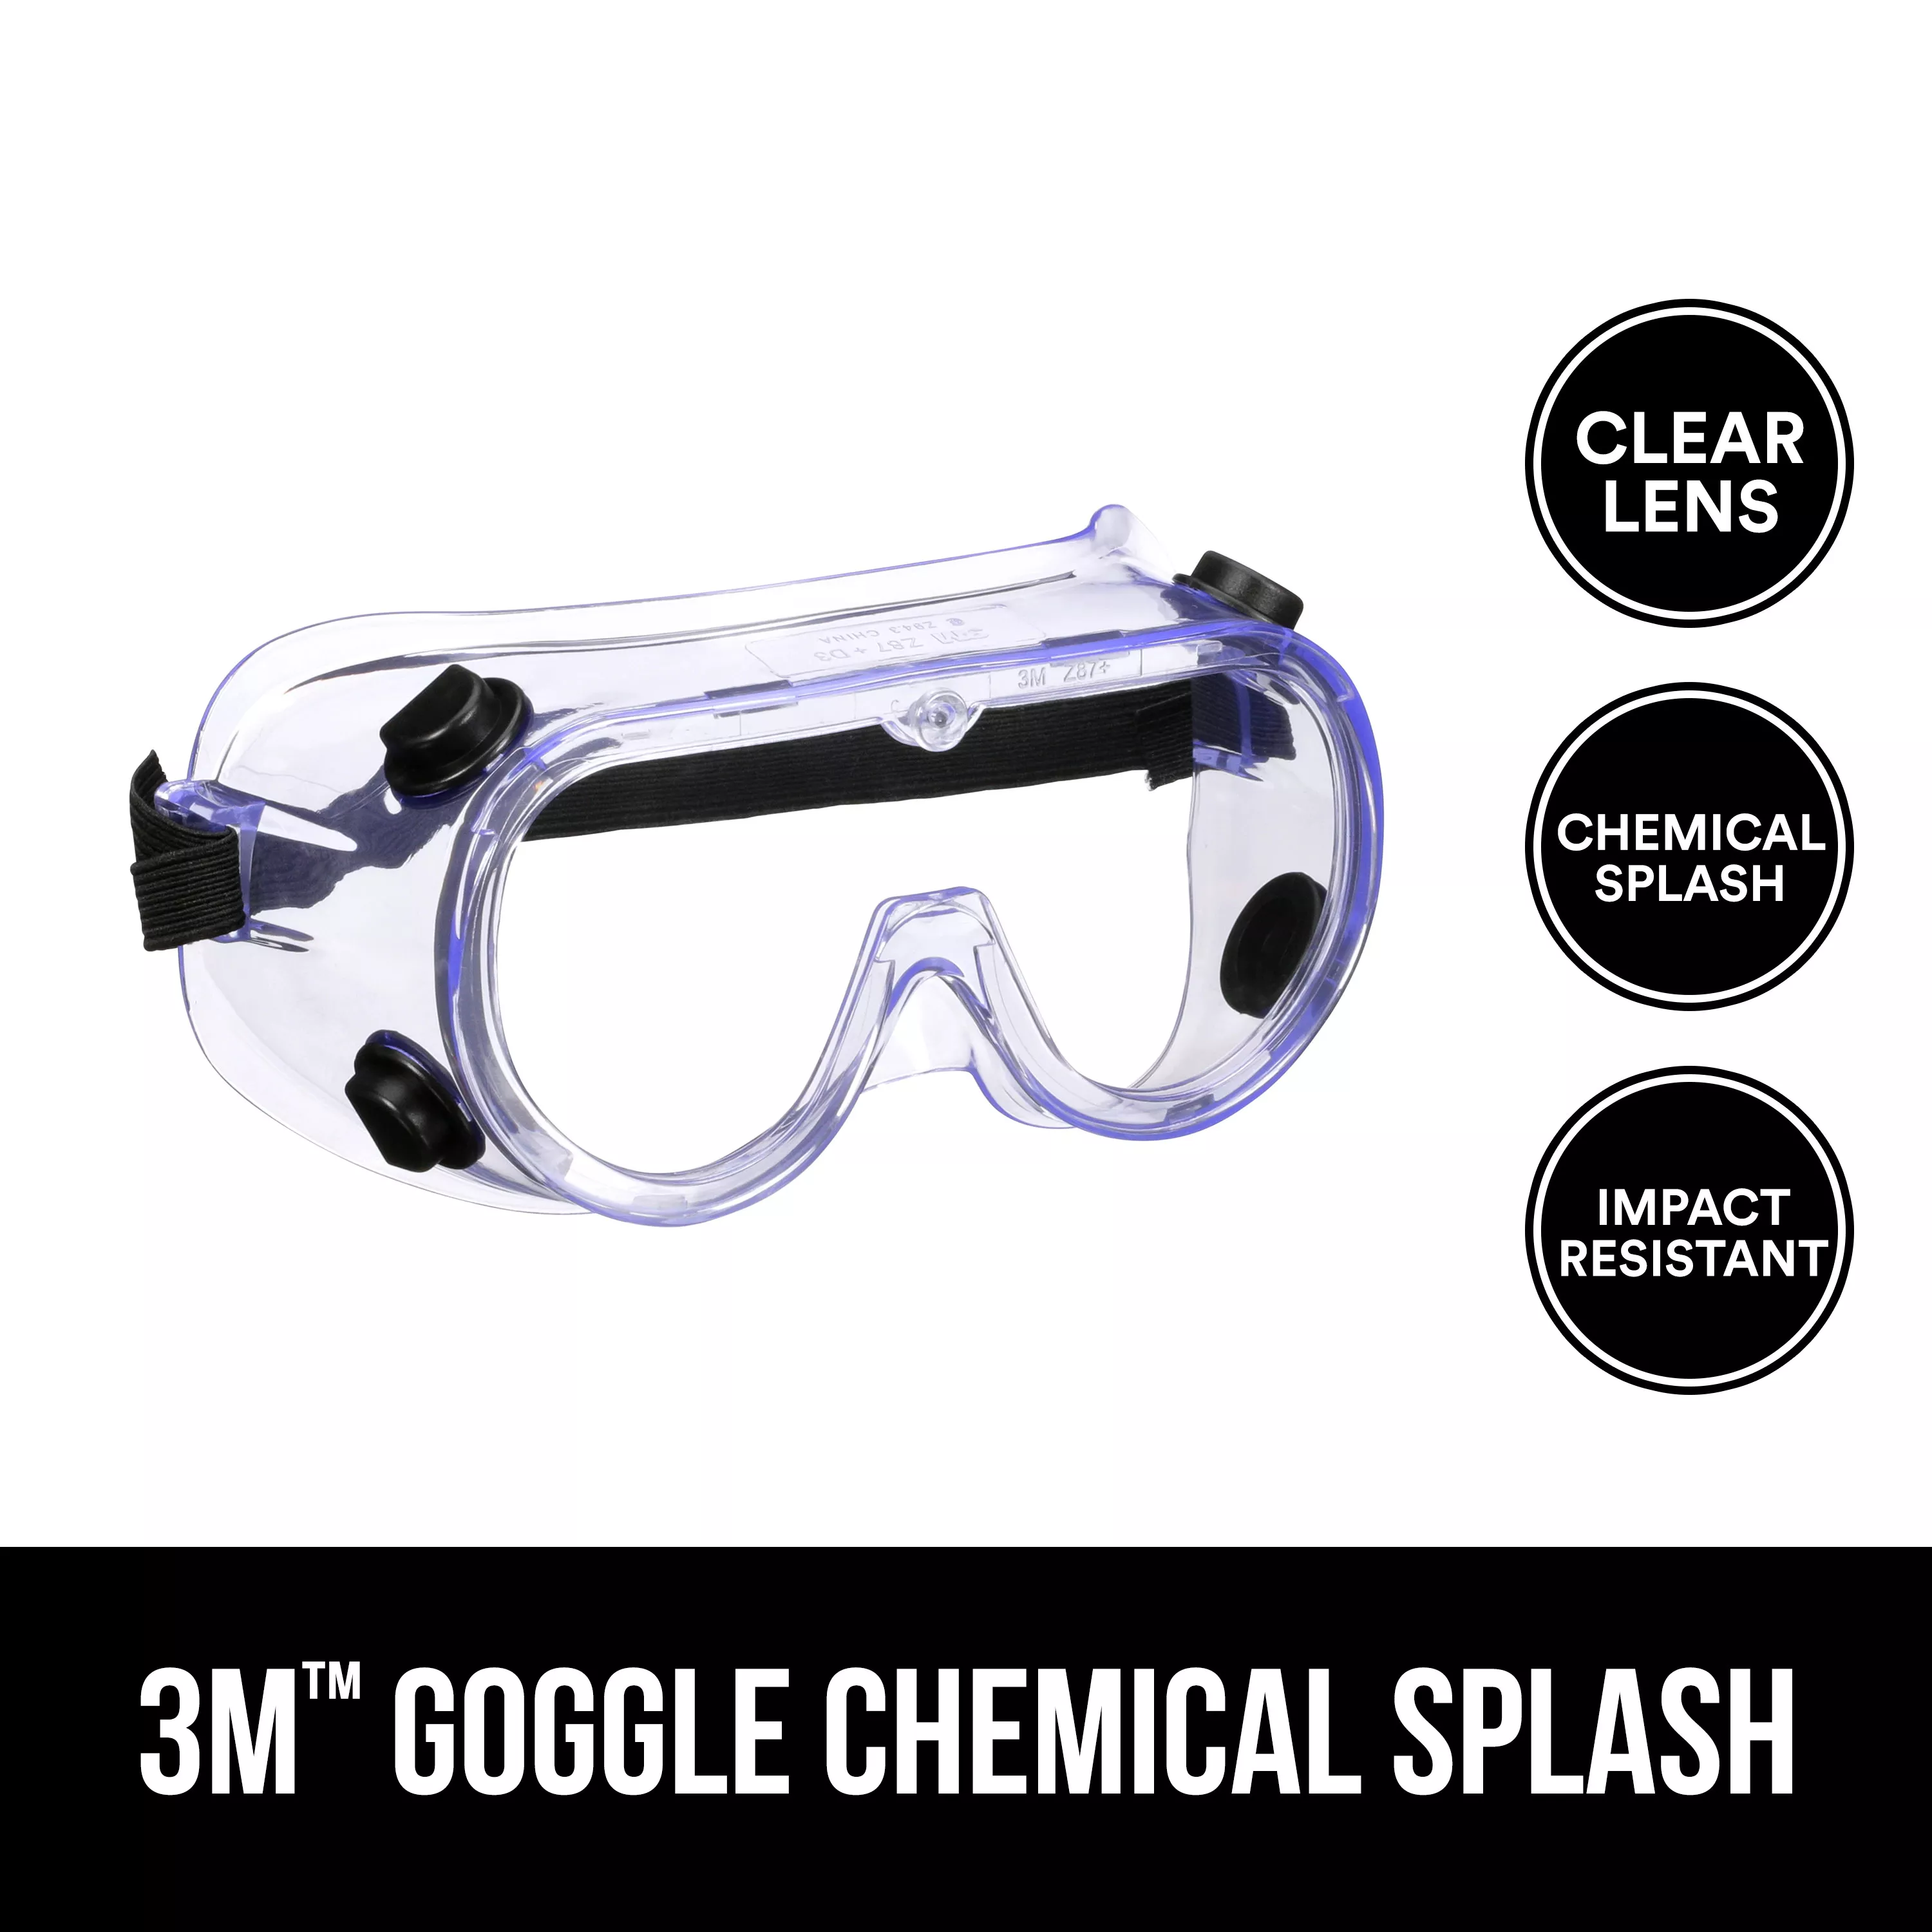 3M™ Goggle Chemical Splash, 91252H1-DC-14, Black Strap, Clear Lens,
14/case